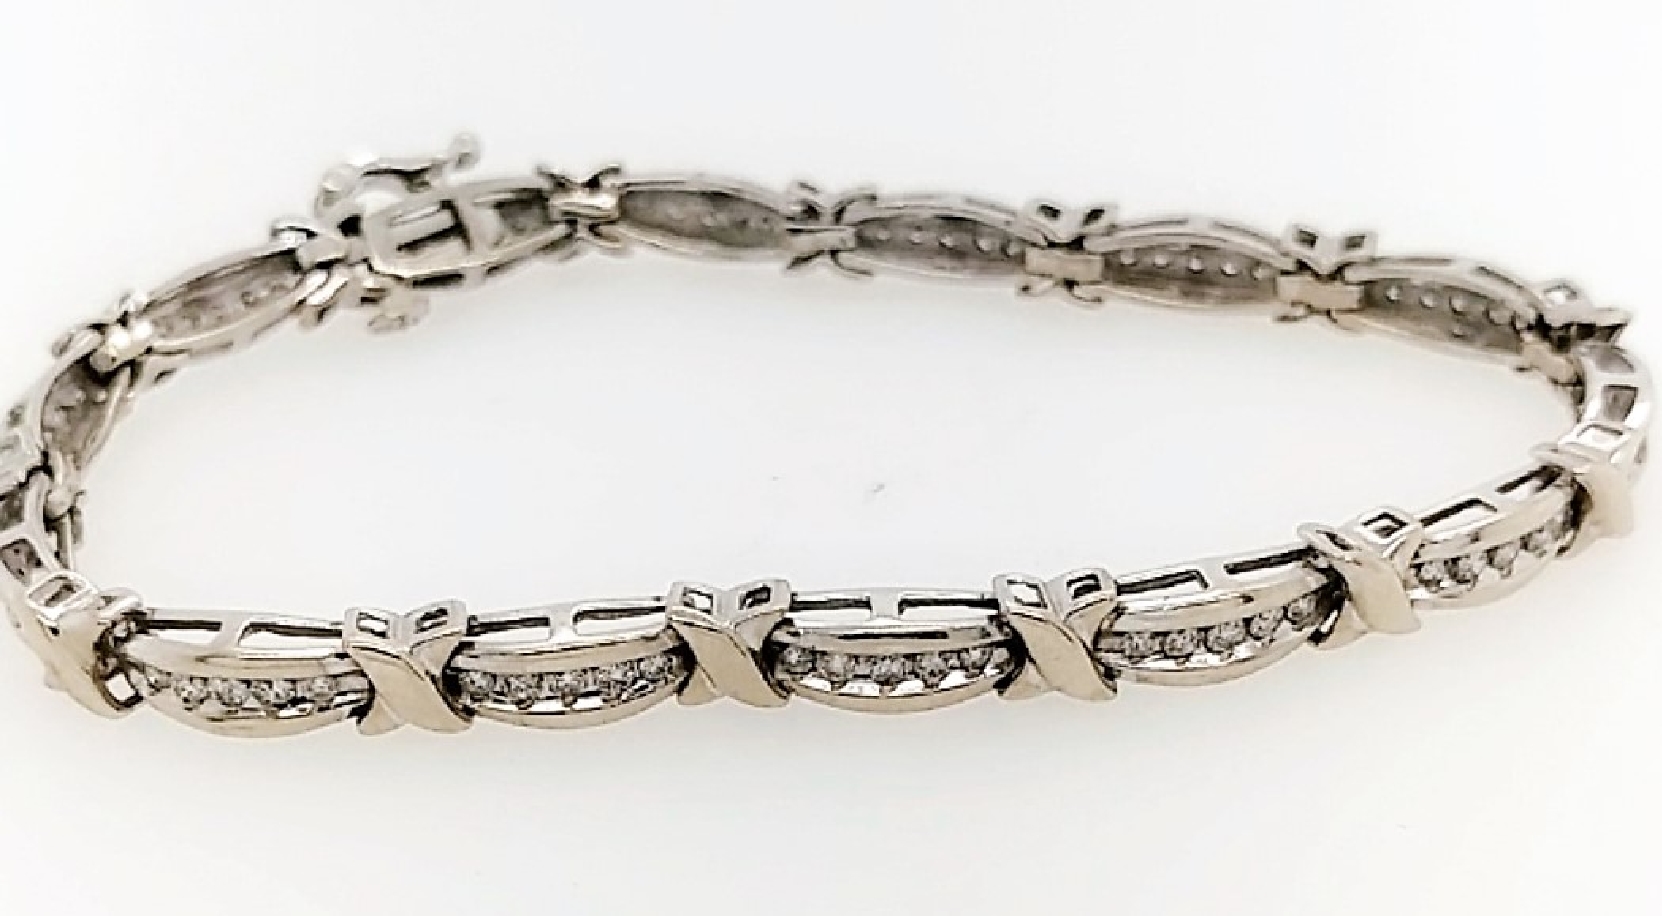 10k white gold x link tennis bracelet with diamonds
Approx. 0.70 CTTW